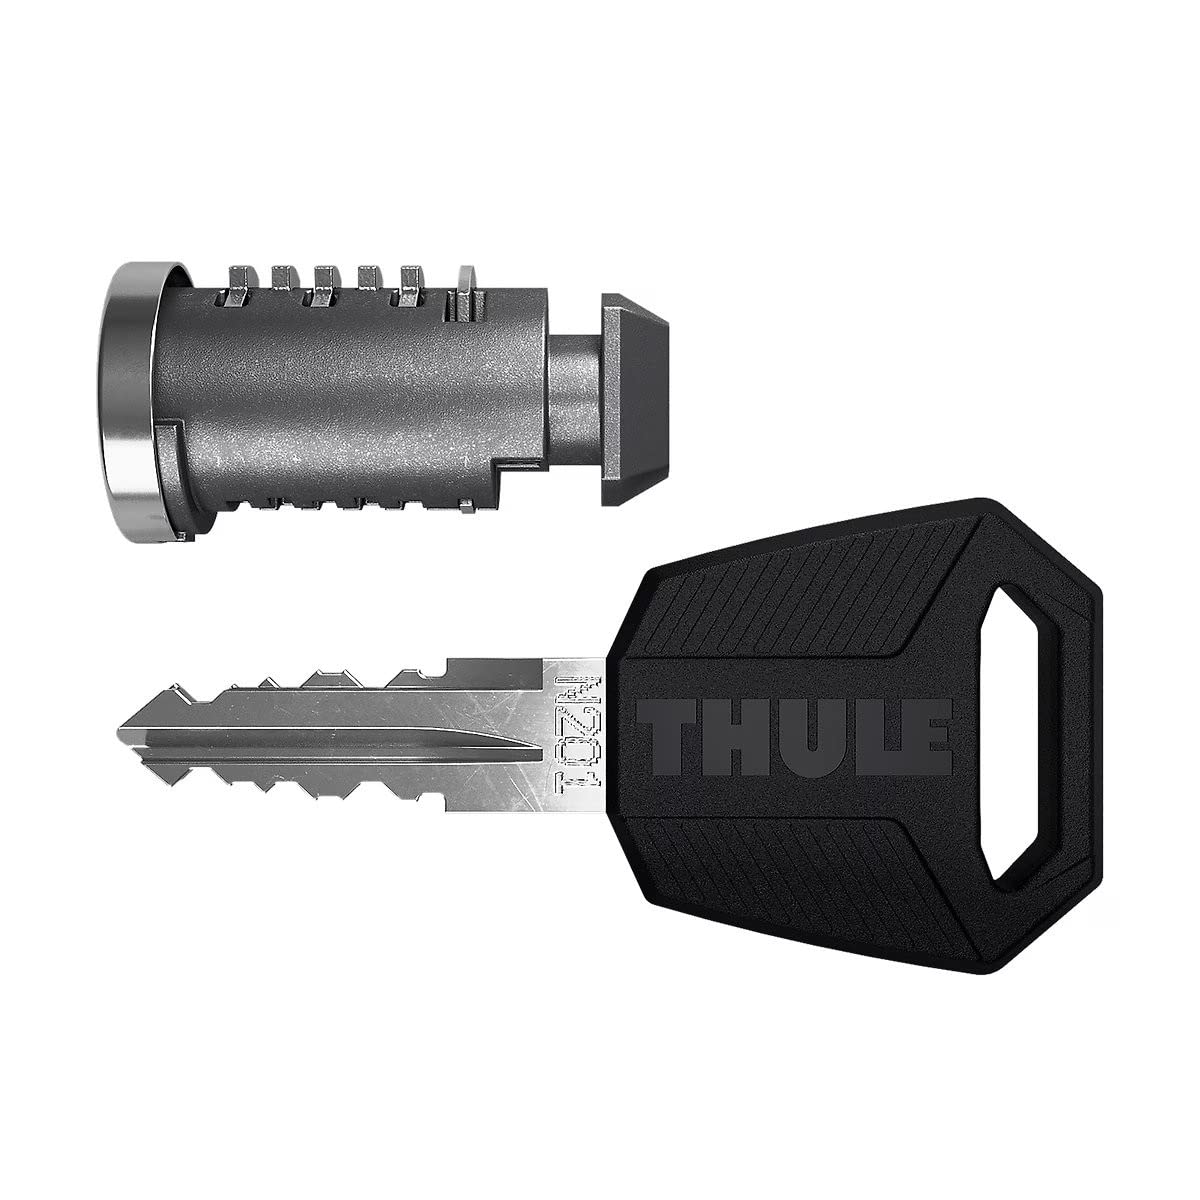 Thule 450800 One-Key 8 System 8 Pack, silber/schwarz von Thule